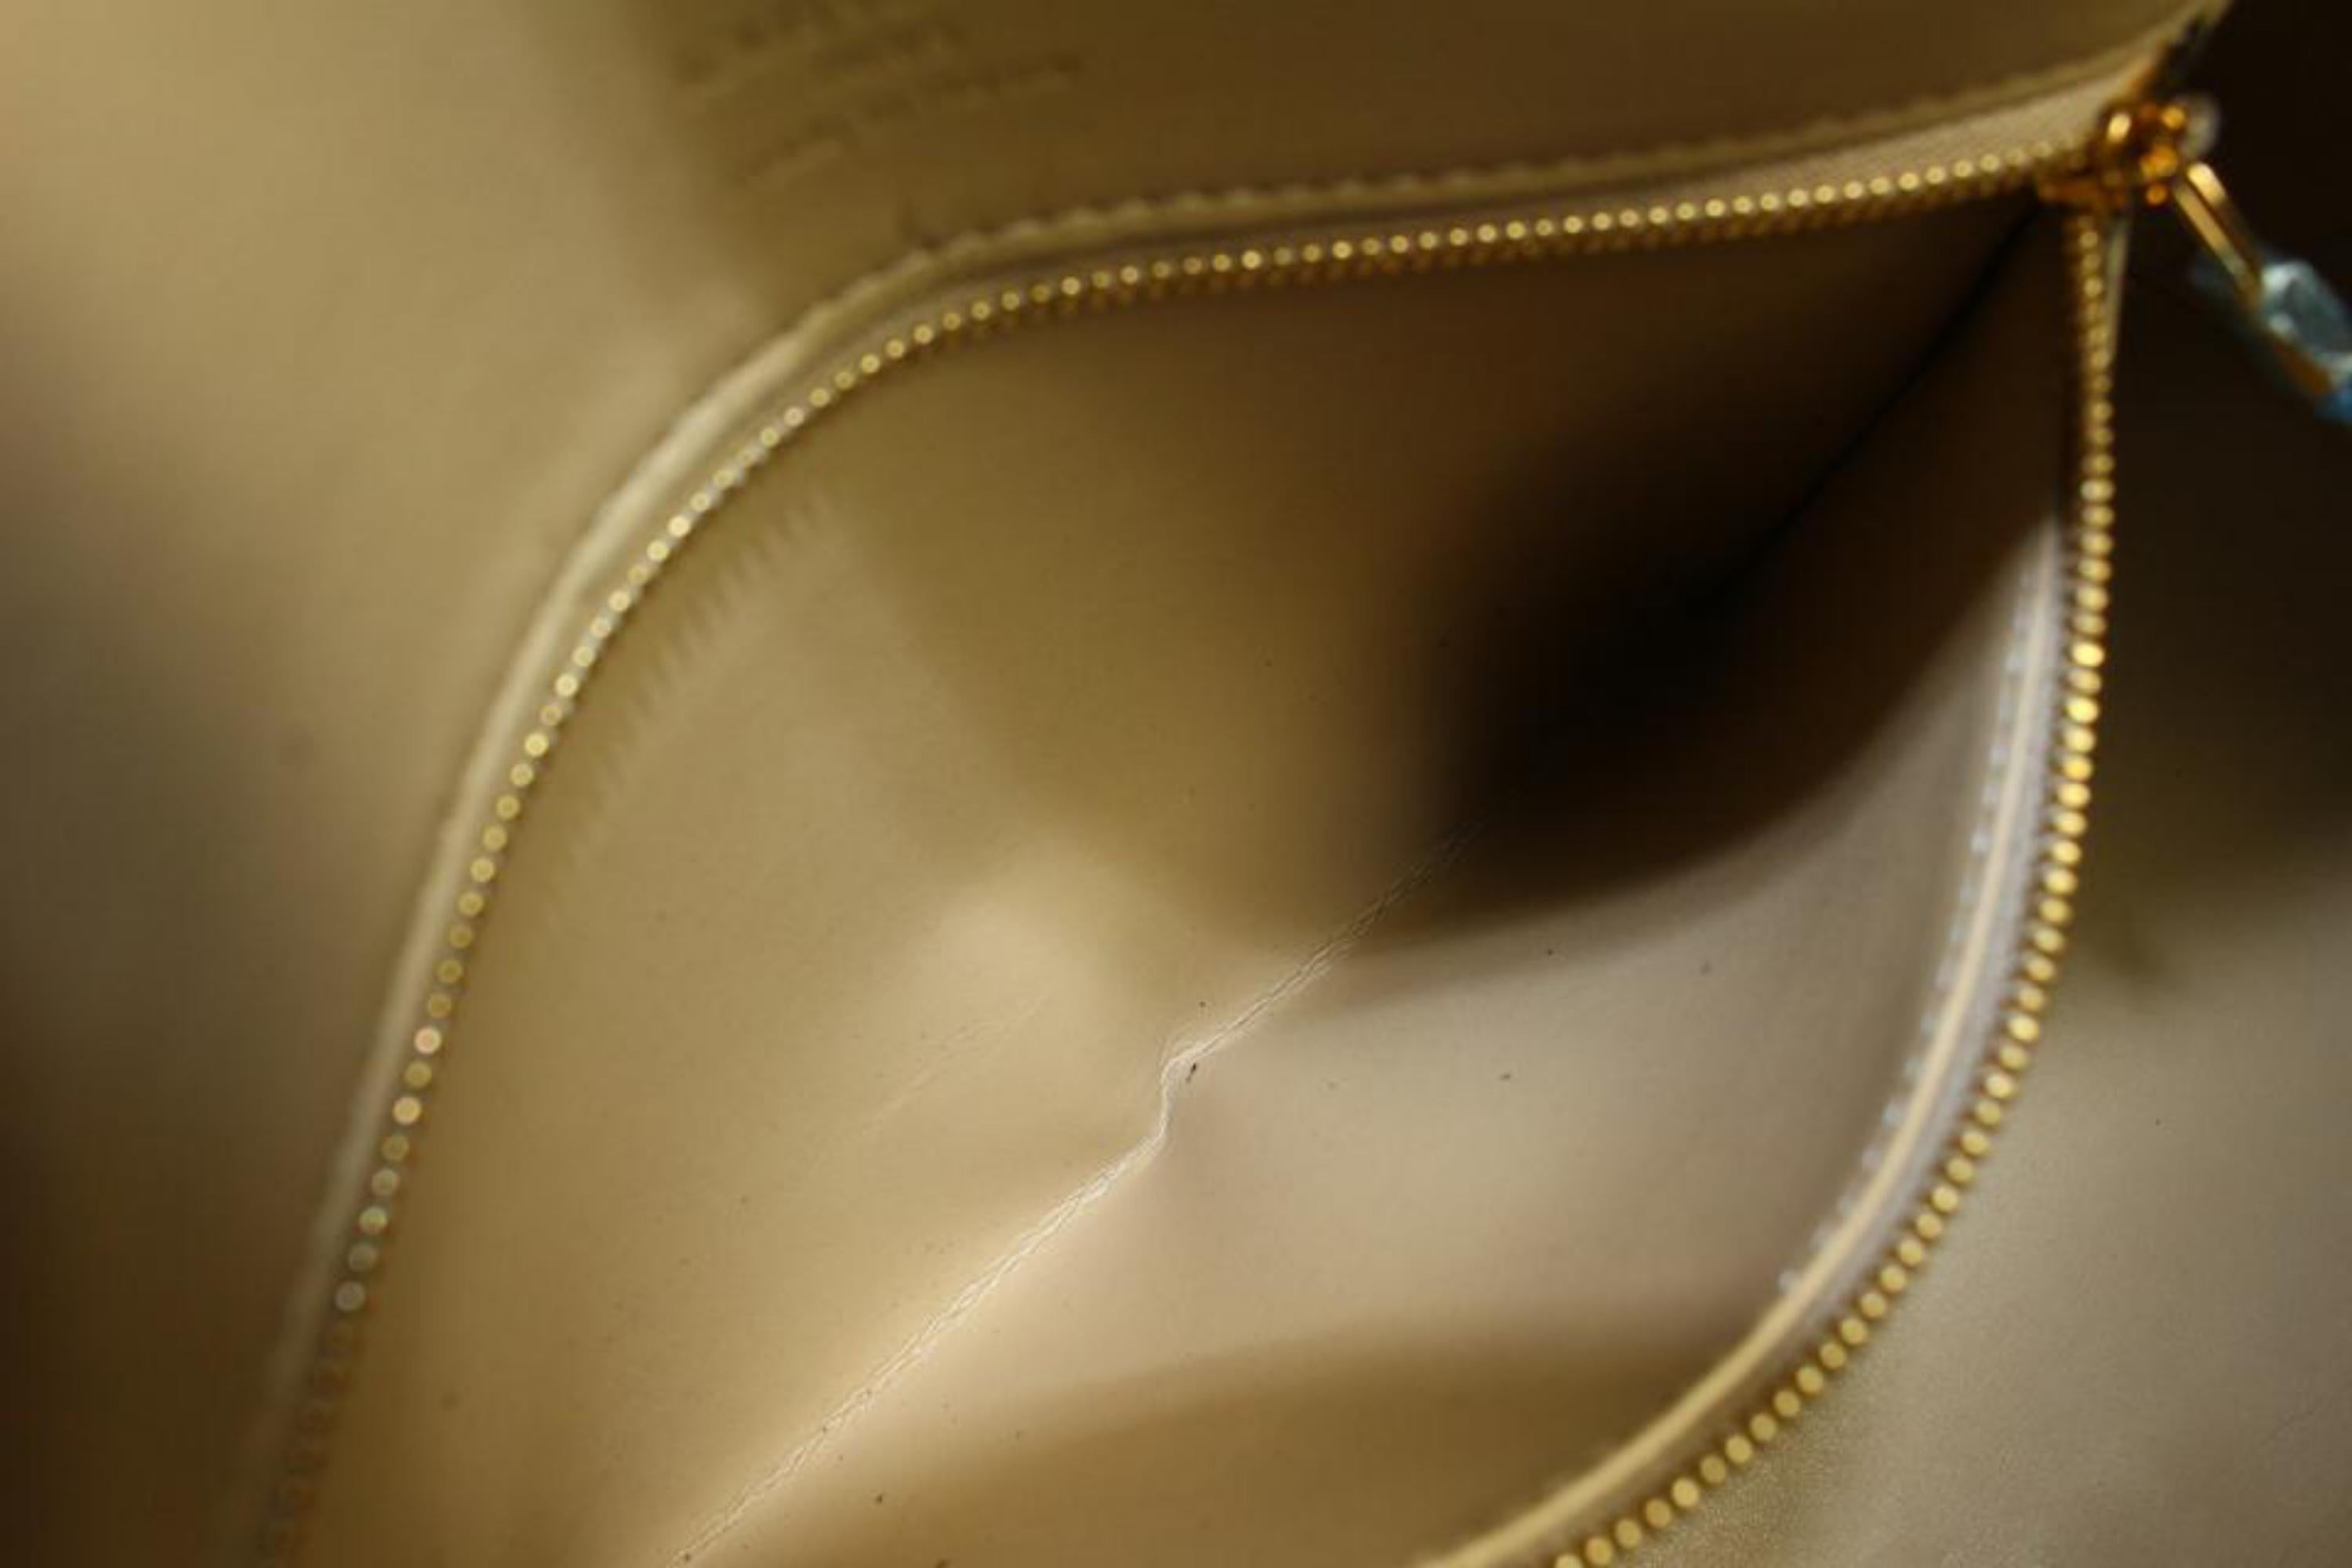 Louis Vuitton Yellow Monogram Vernis Mercer Keepall Duffle Bag 23lz531sW, Women's, Size: One Size